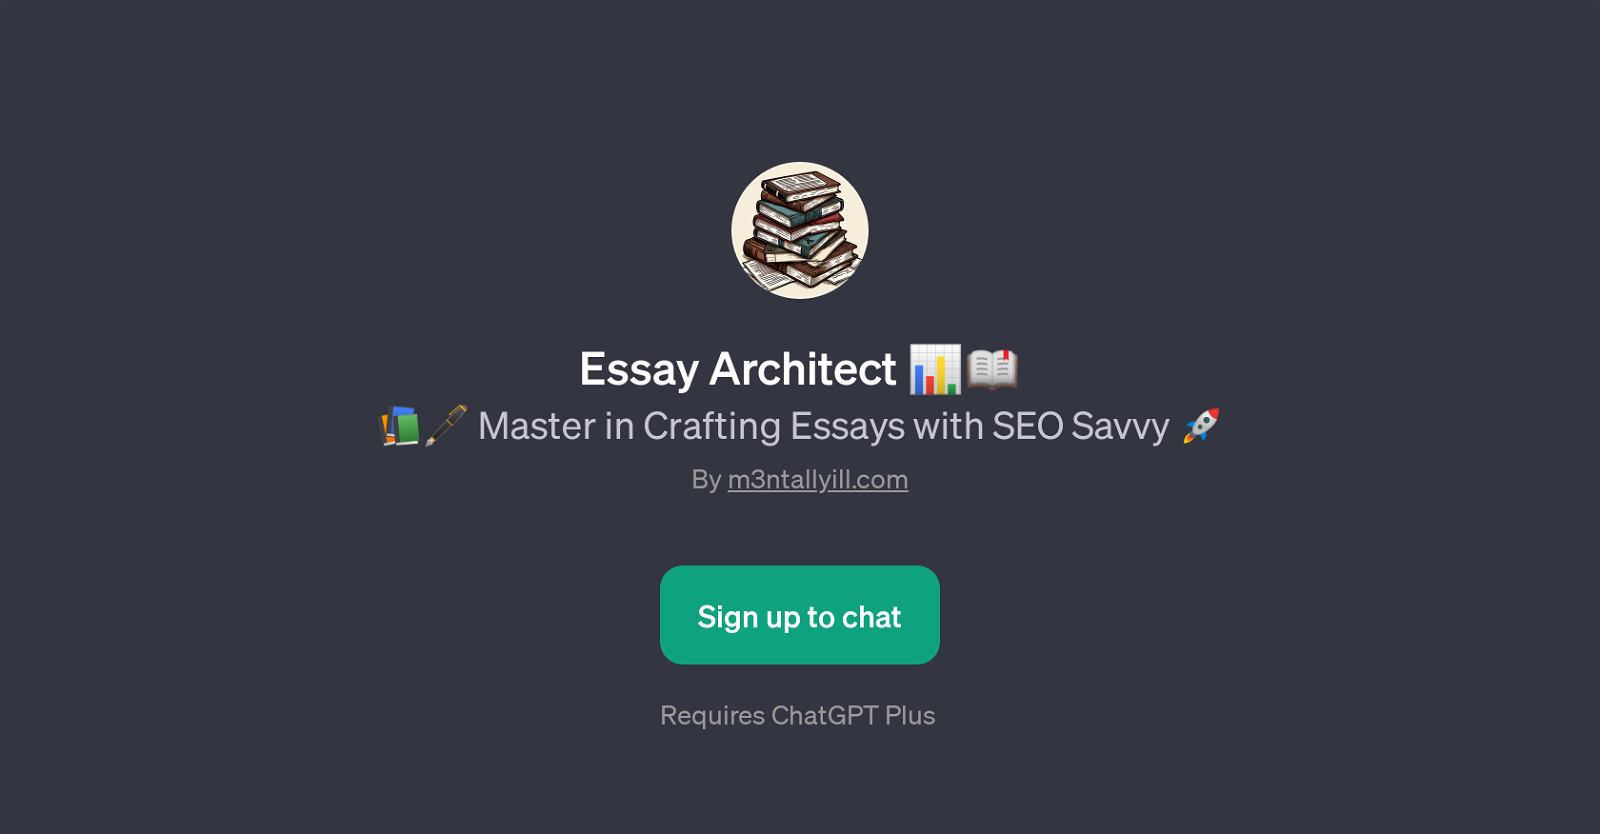 Essay Architect website